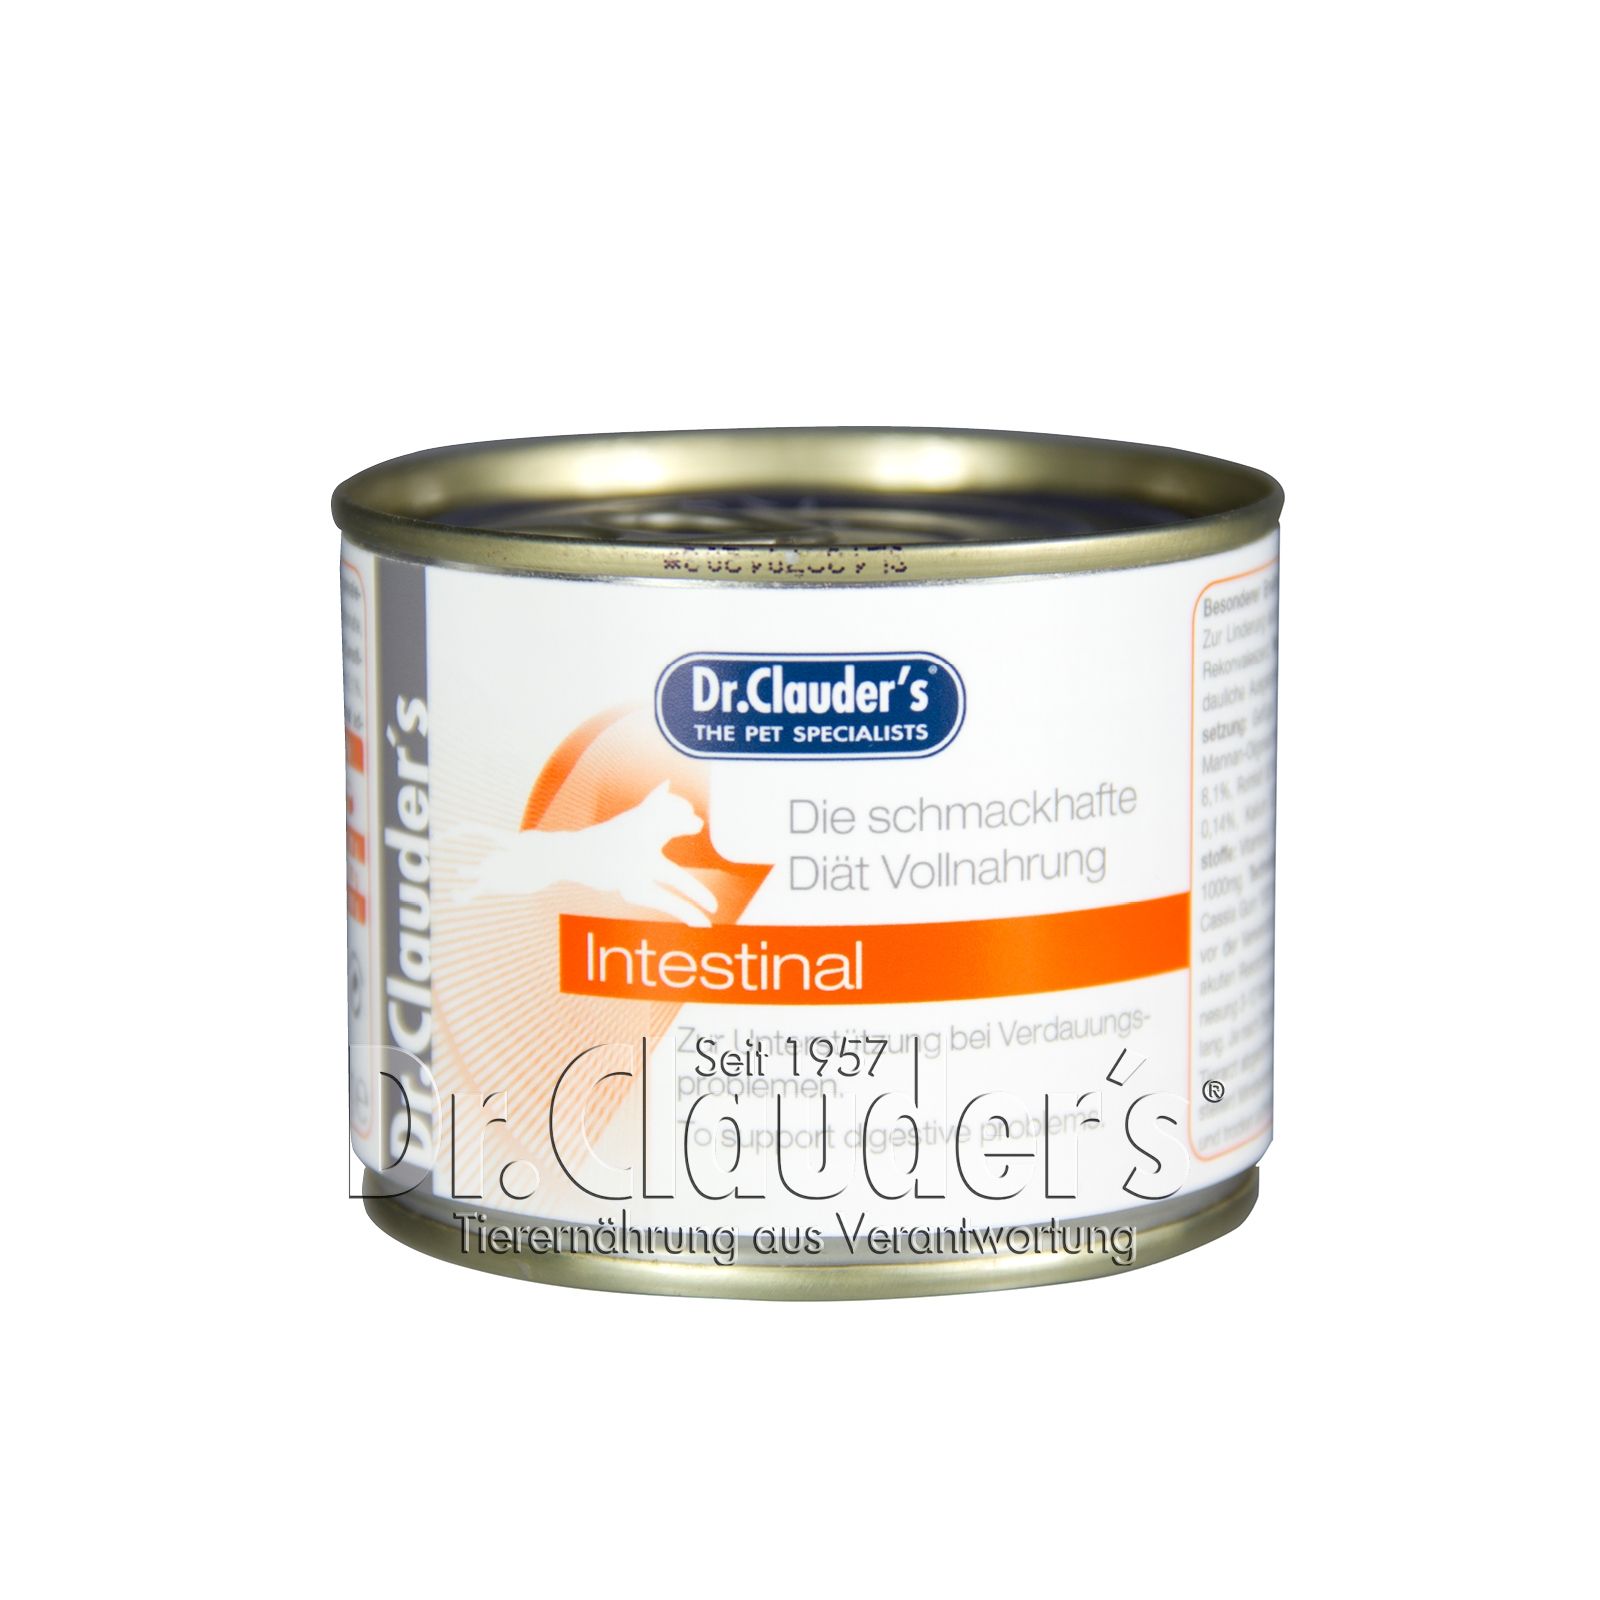 Dr. Clauder’s Cat Intestinal, 200 g 200